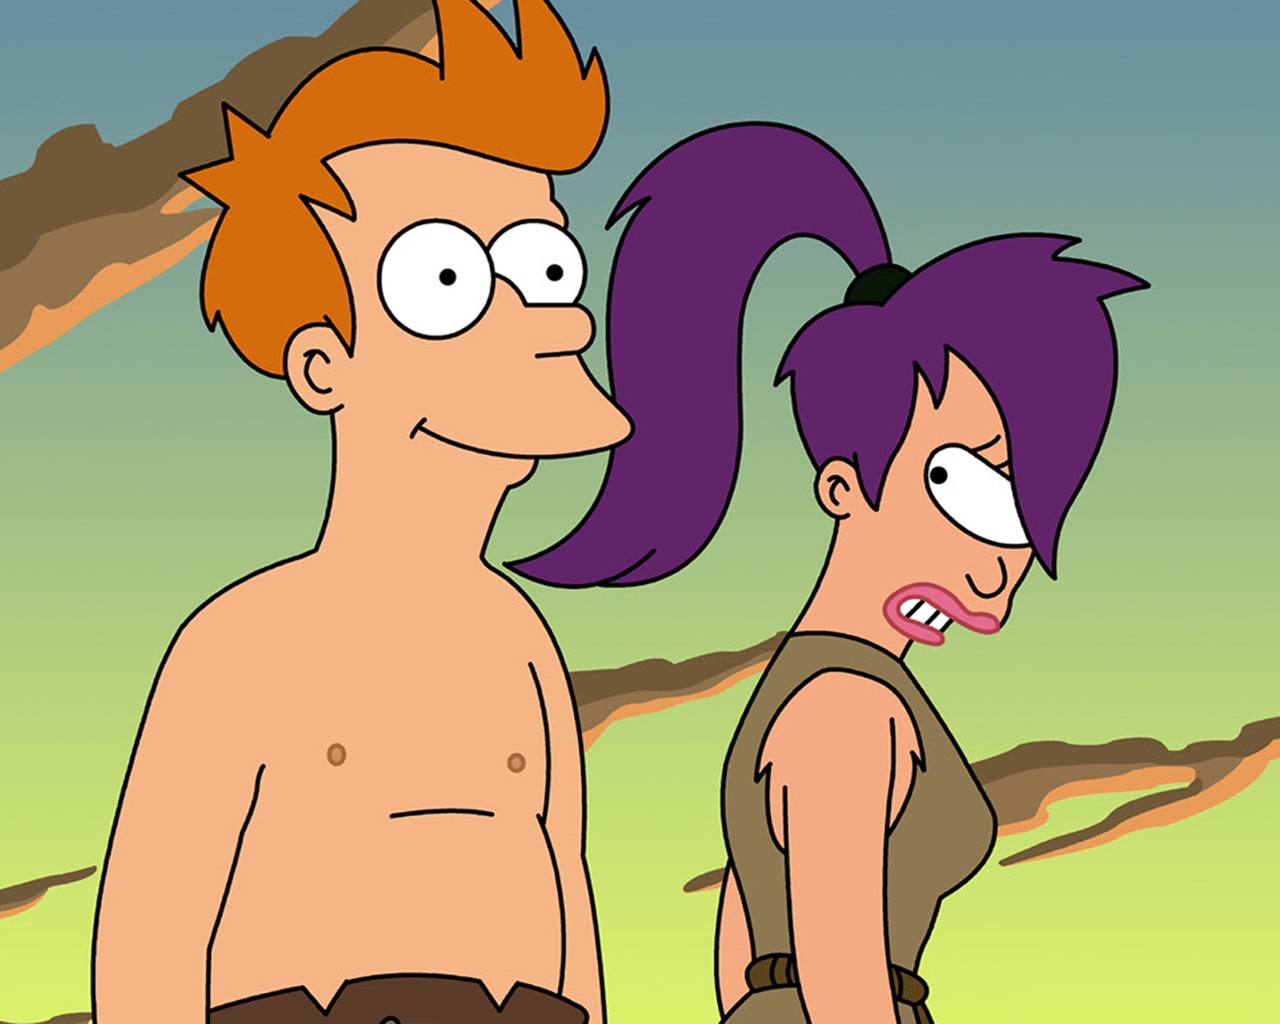 Futurama Fry and Leela for 1280 x 1024 resolution